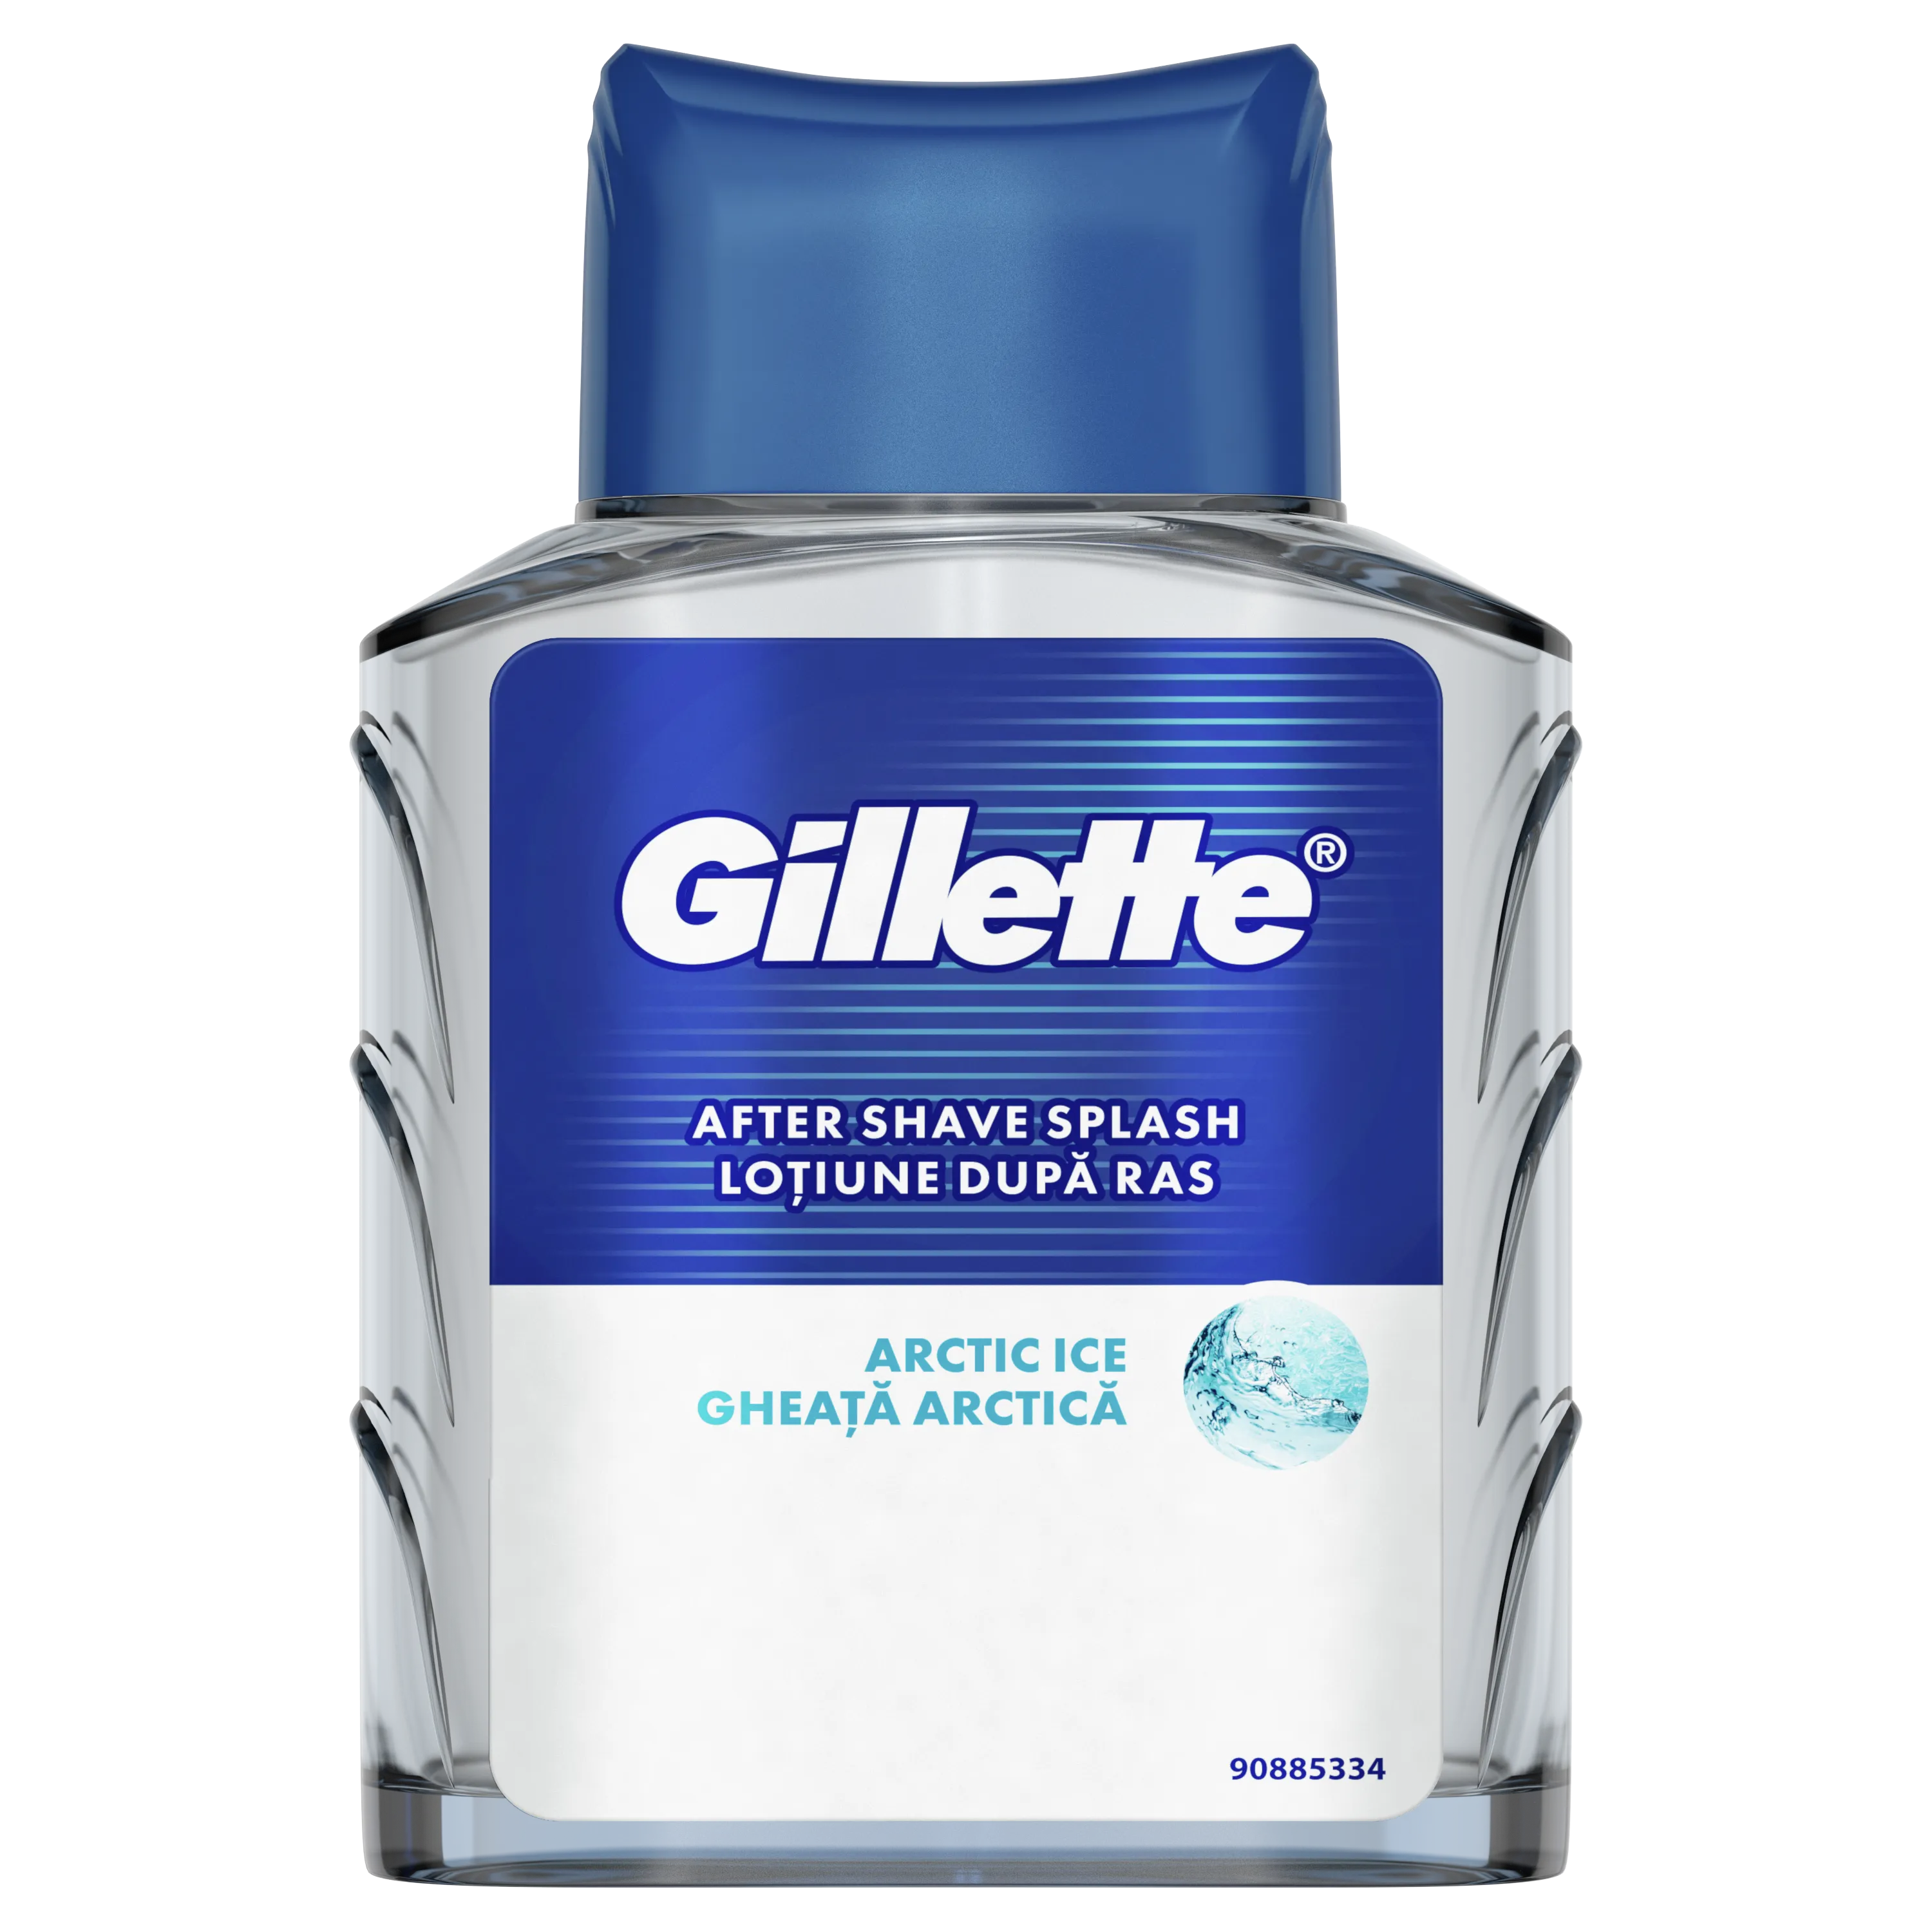 Gillette Arctic Ice Woda po goleniu, 100 ml